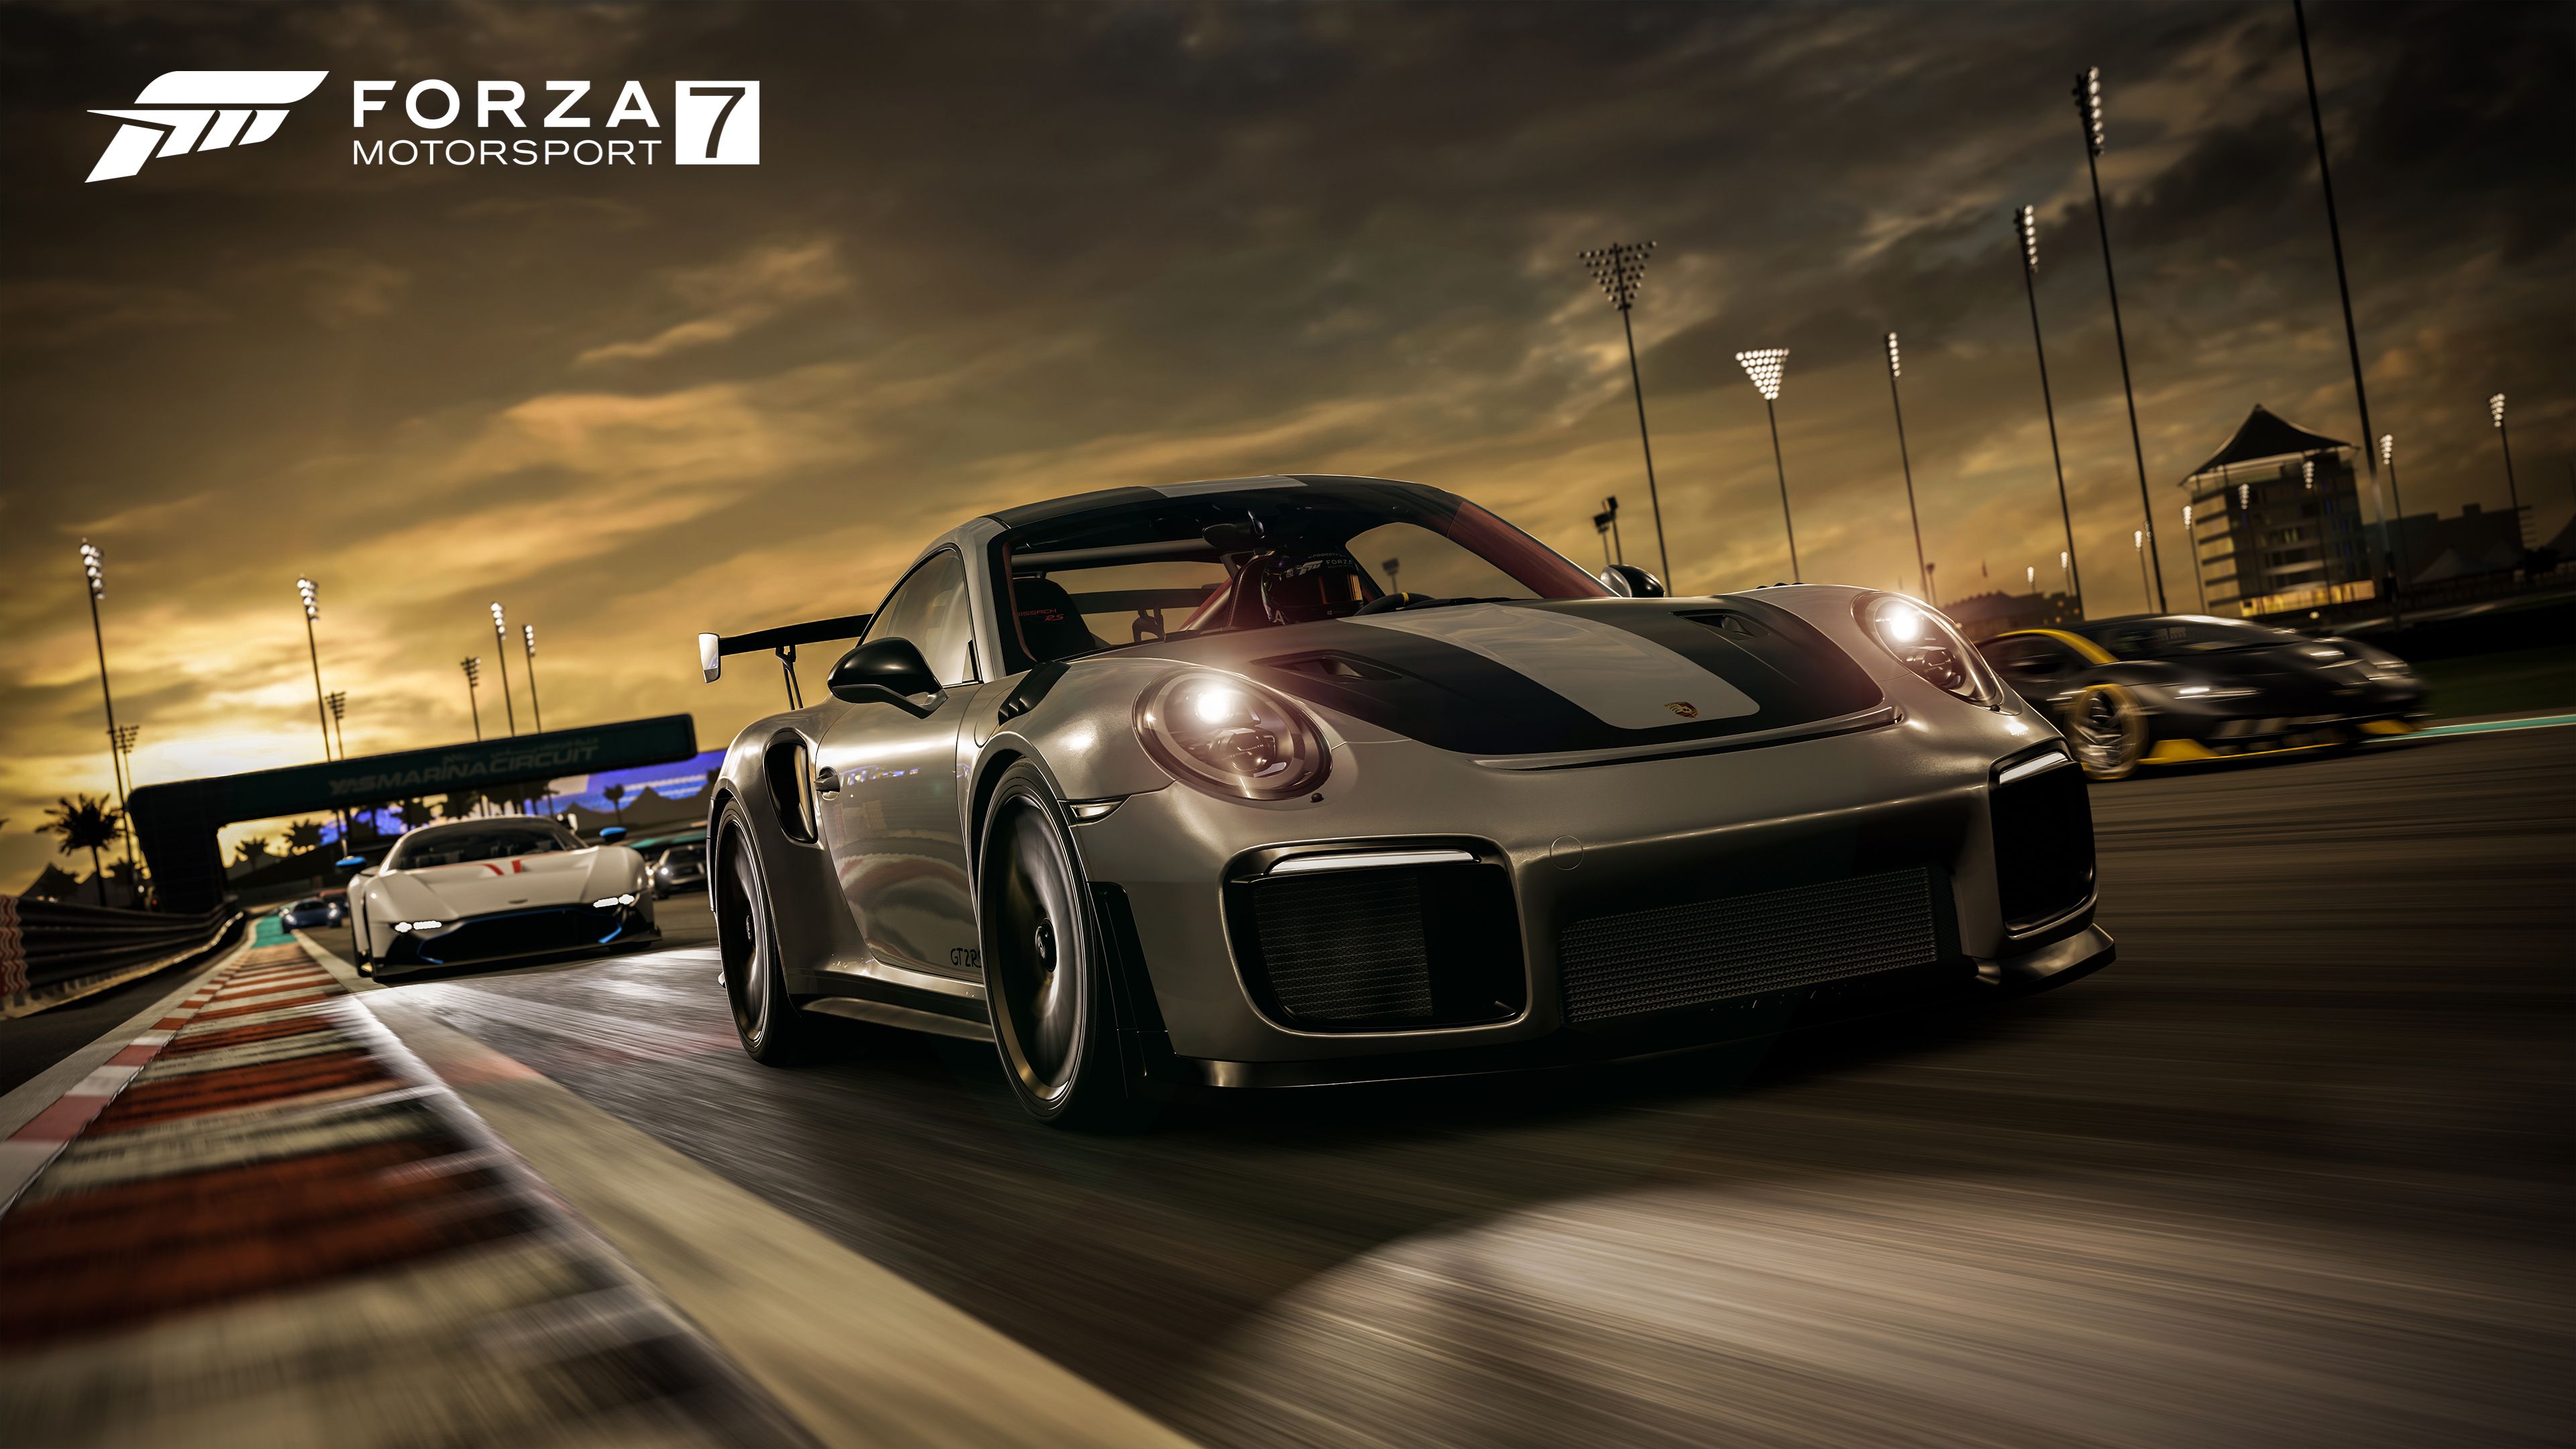 Forza Motorsport 7 Porsche 911 Gt2 Rs 4k Wallpapers Hd Wallpapers